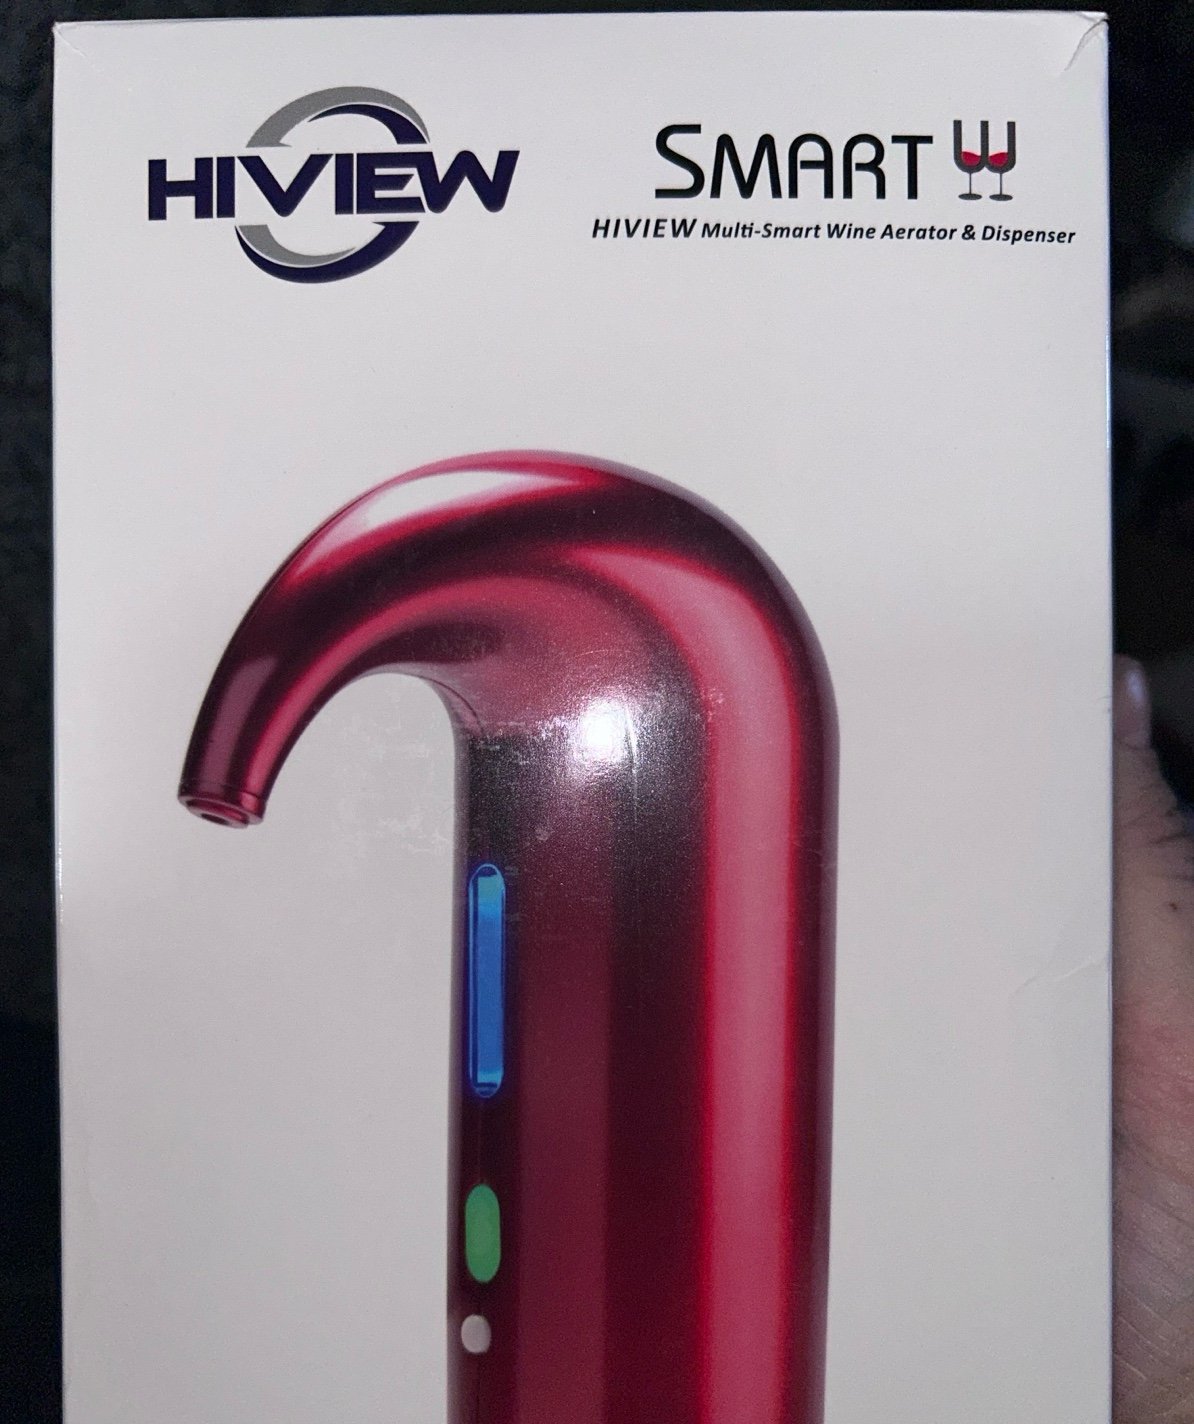 Hiview Multi-smart wine aerator & dispenser 05eZXHKgx